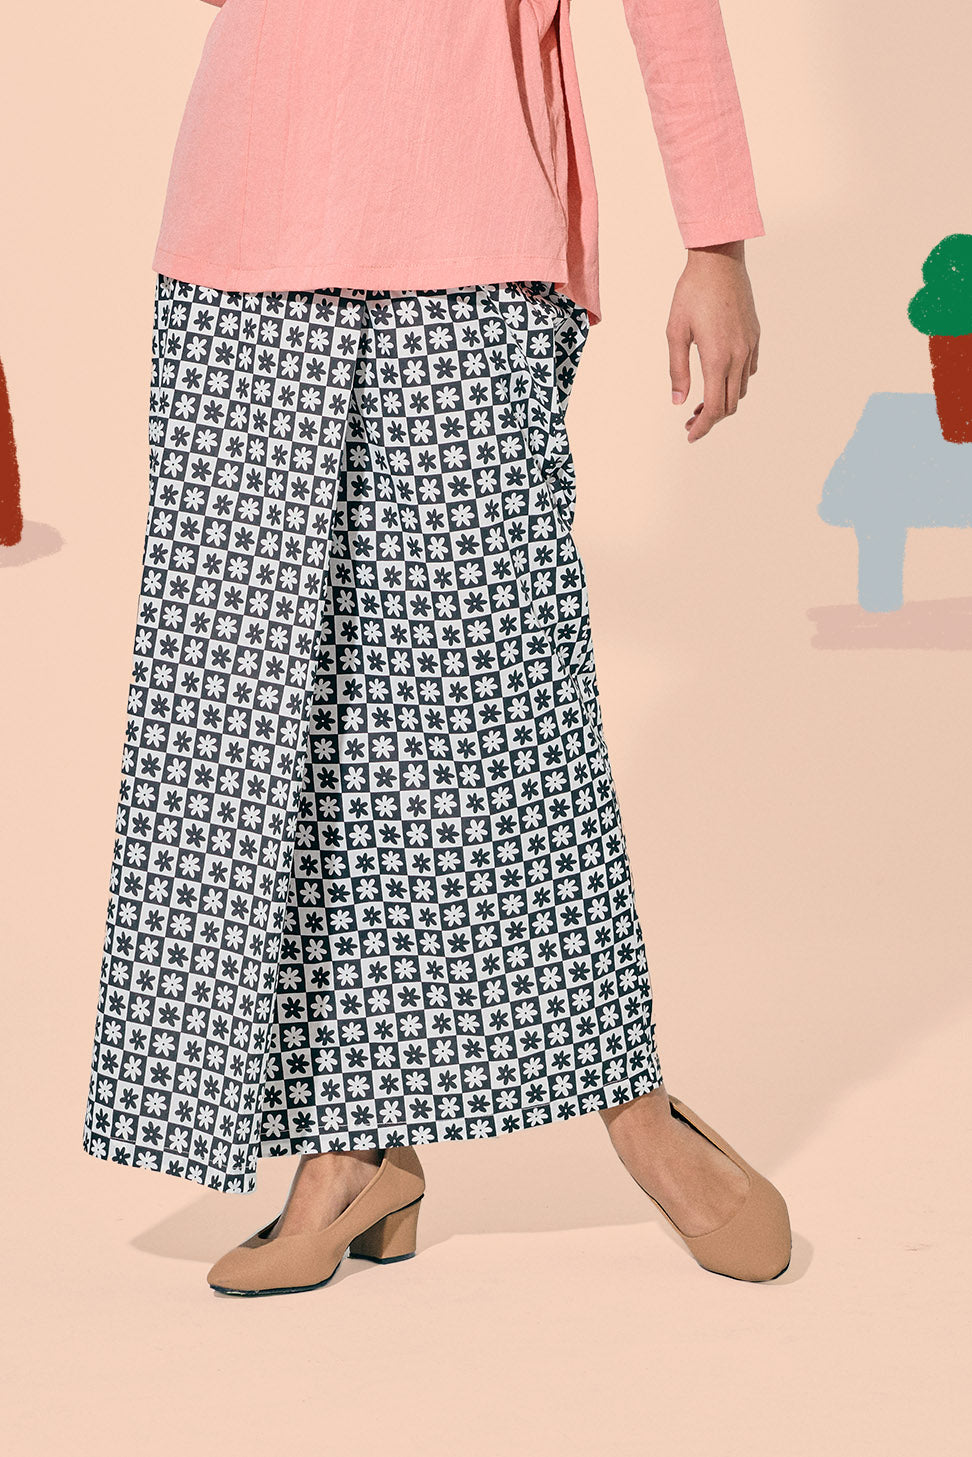 baju raya family sedondon adult woman classic skirt checked daisy print